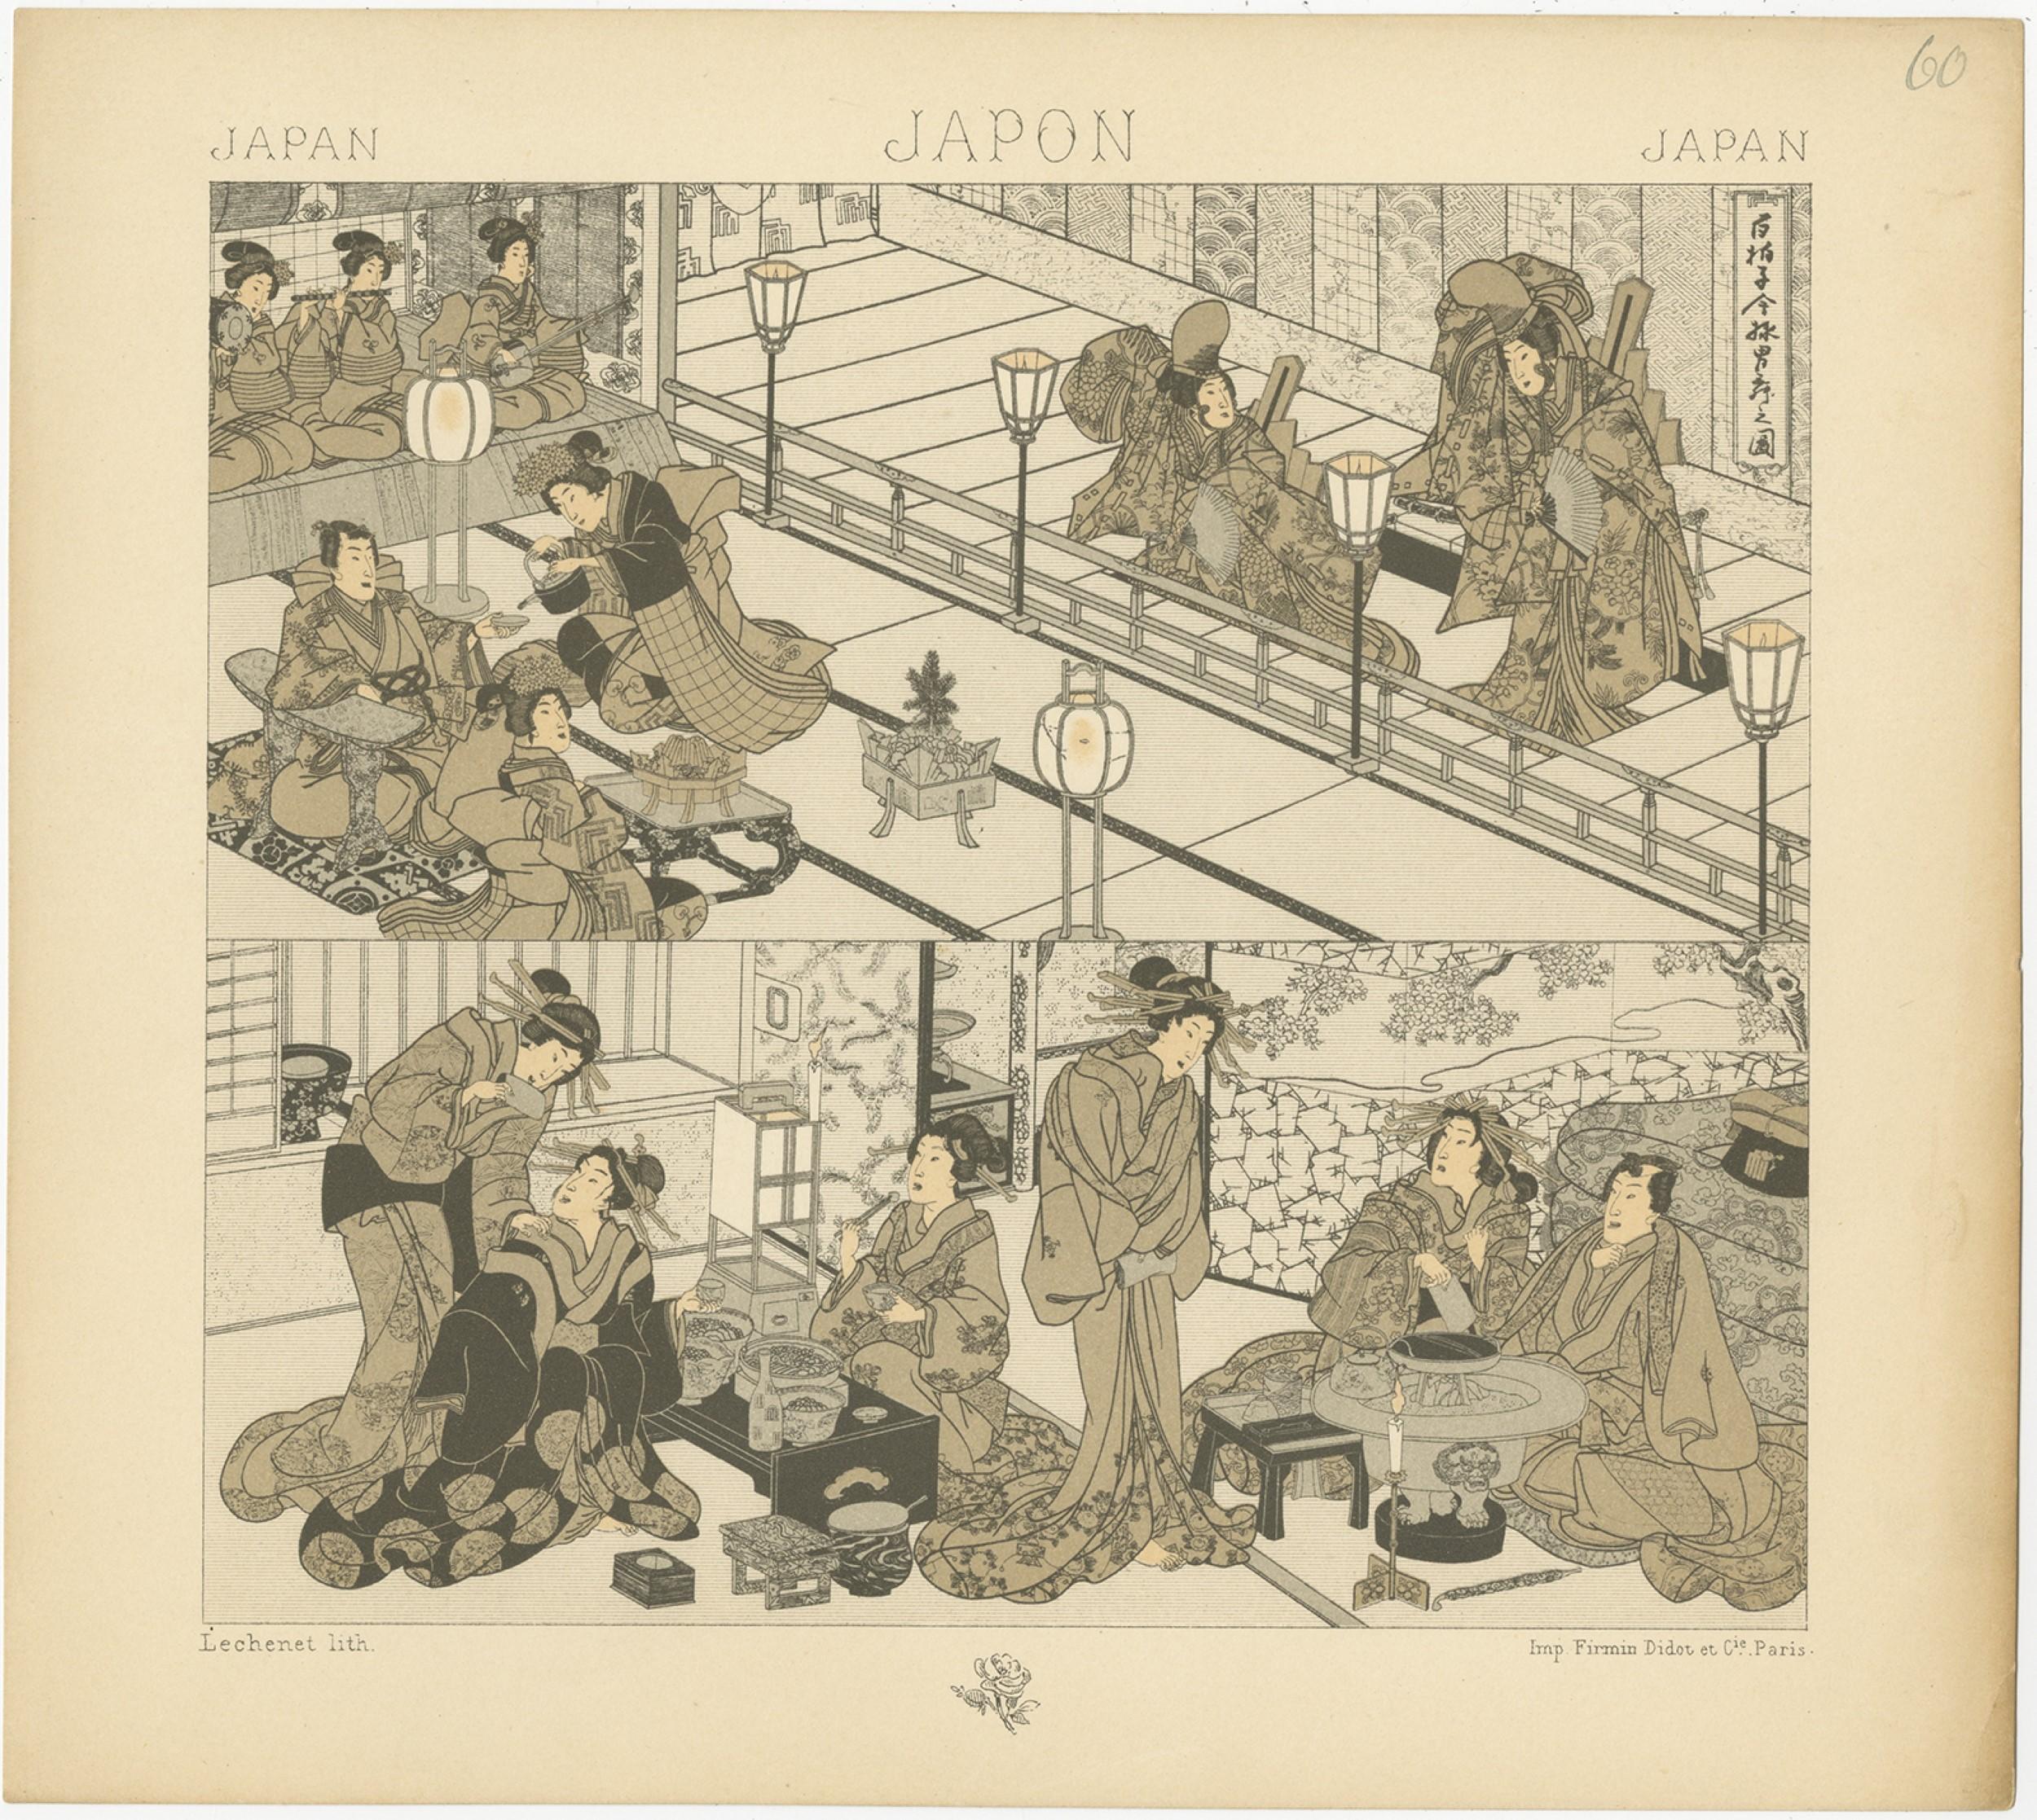 Antique print titled 'Japan - Japon - Japan'. Chromolithograph of Japanese scenes. This print originates from 'Le Costume Historique' by M.A. Racinet. Published, circa 1880.